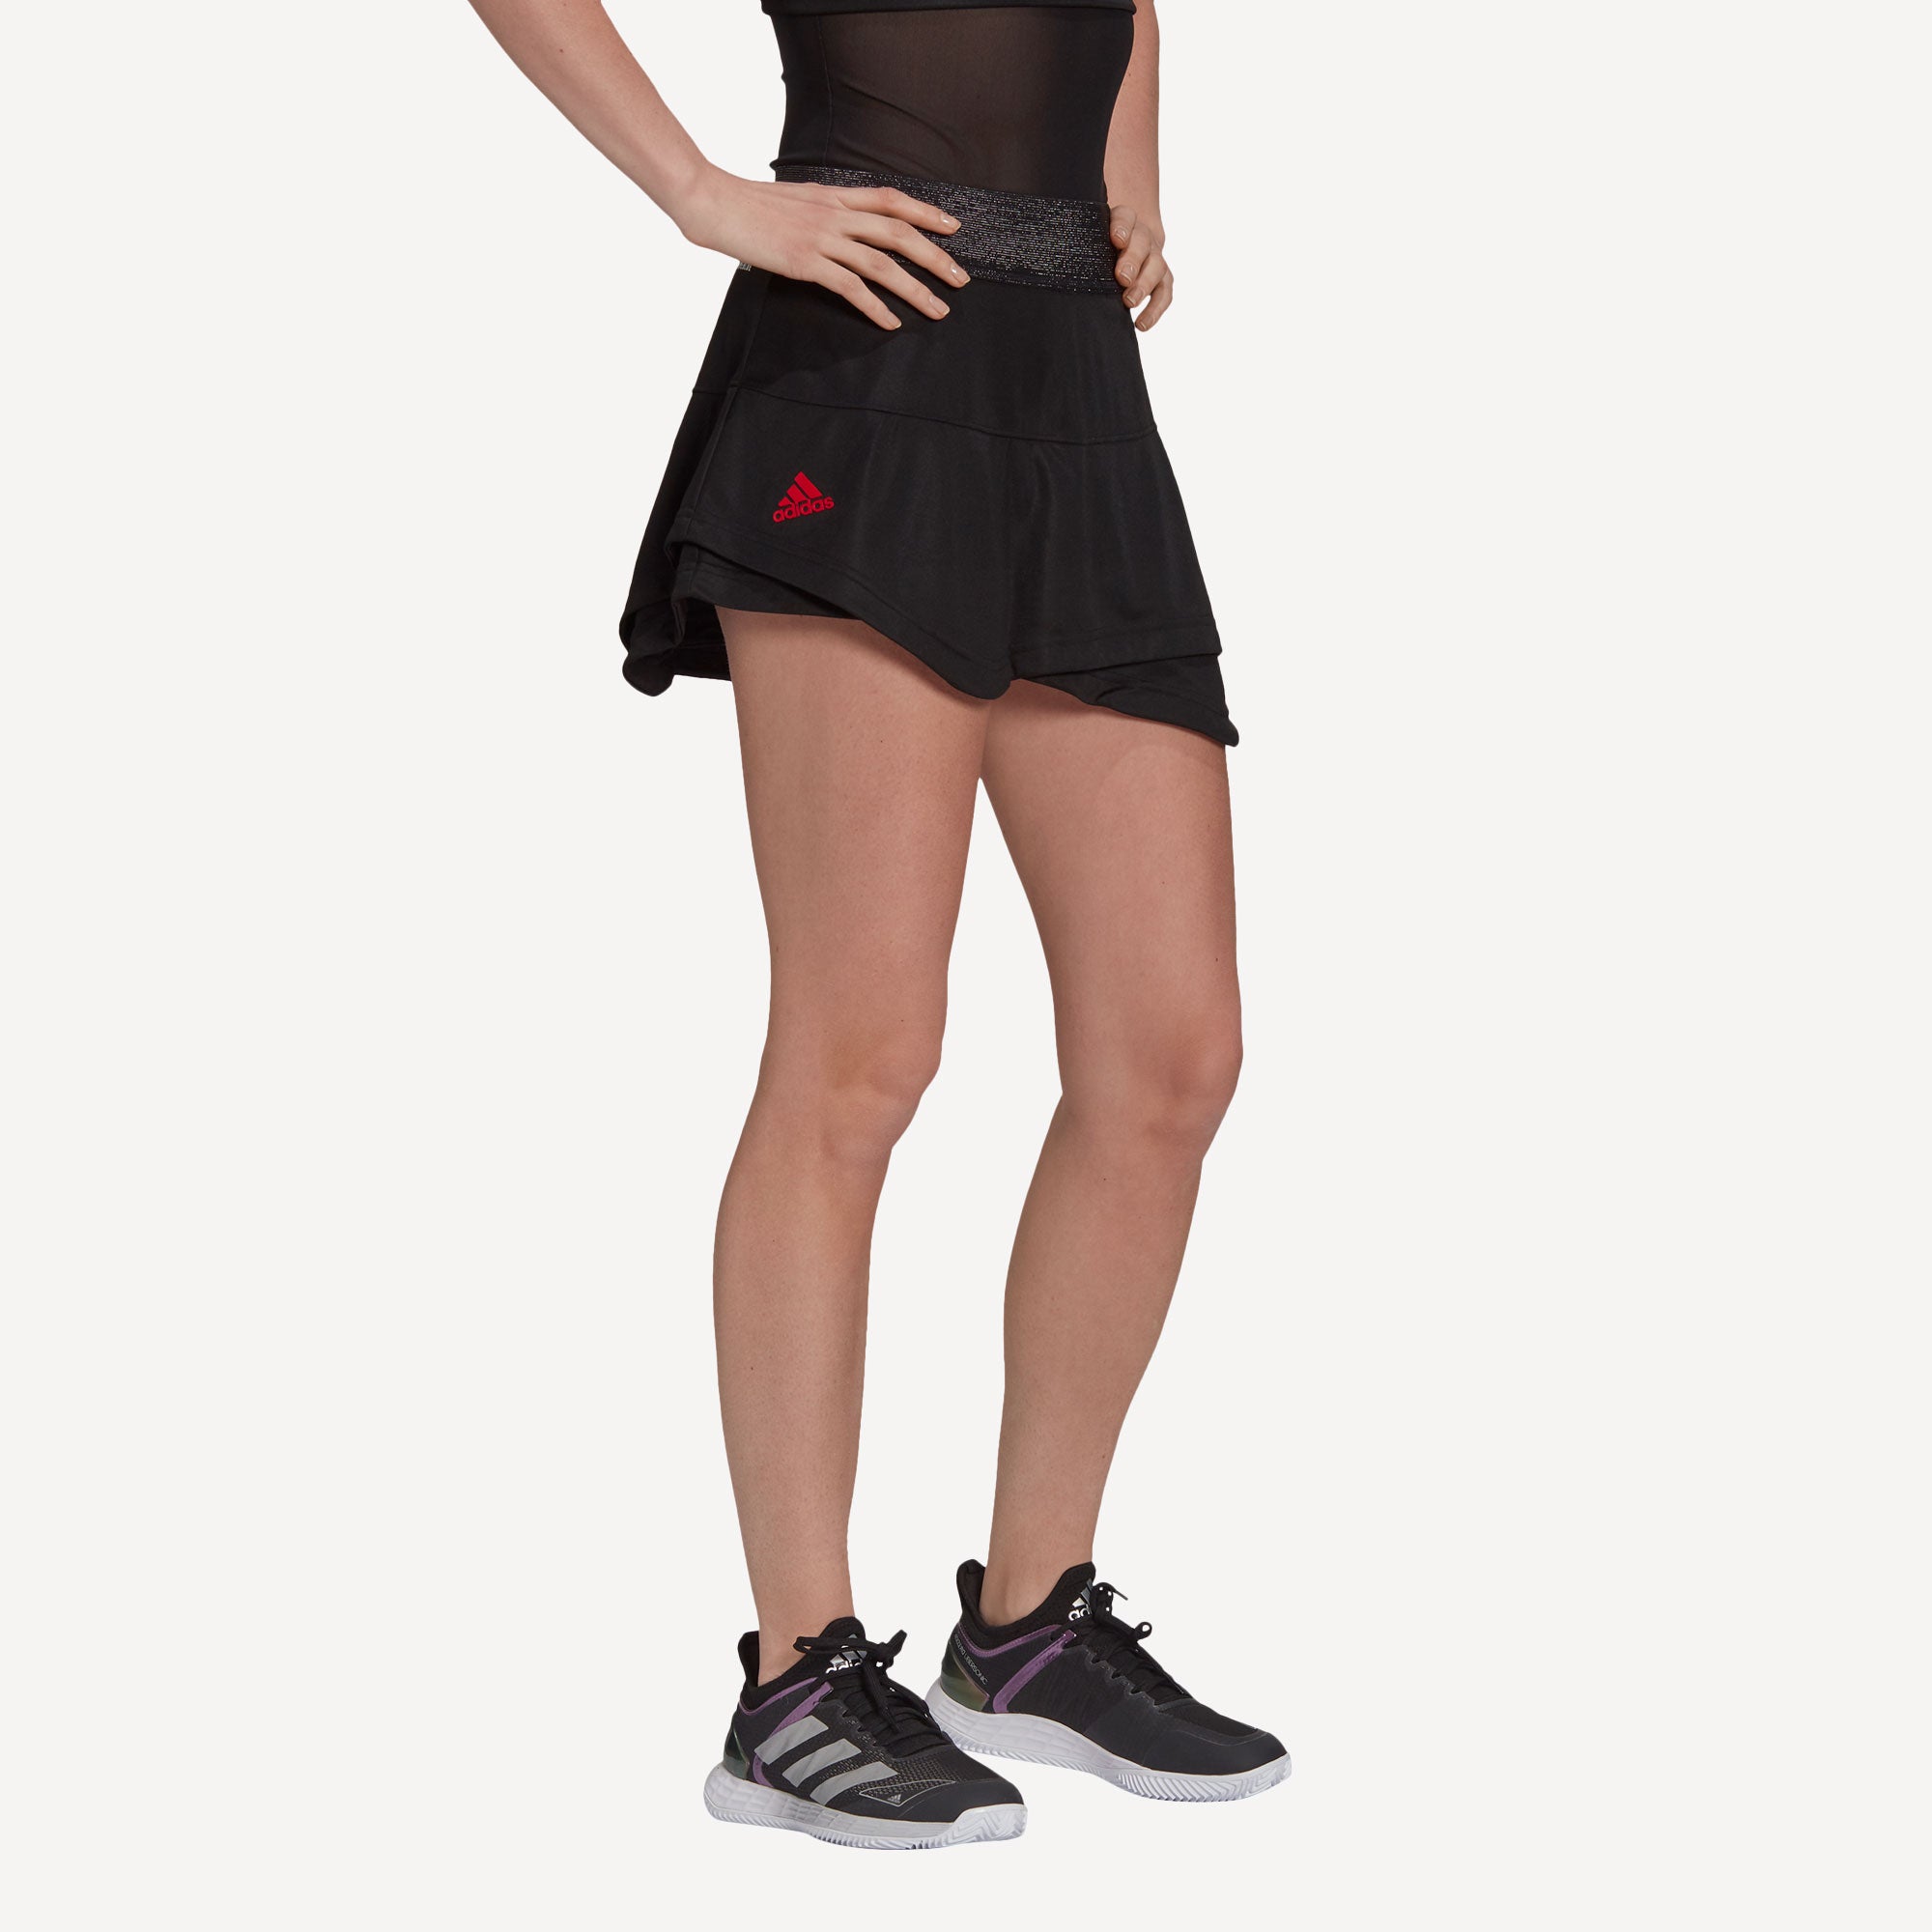 adidas Match Primeblue AeroReady Women's Tennis Skirt Black (1)